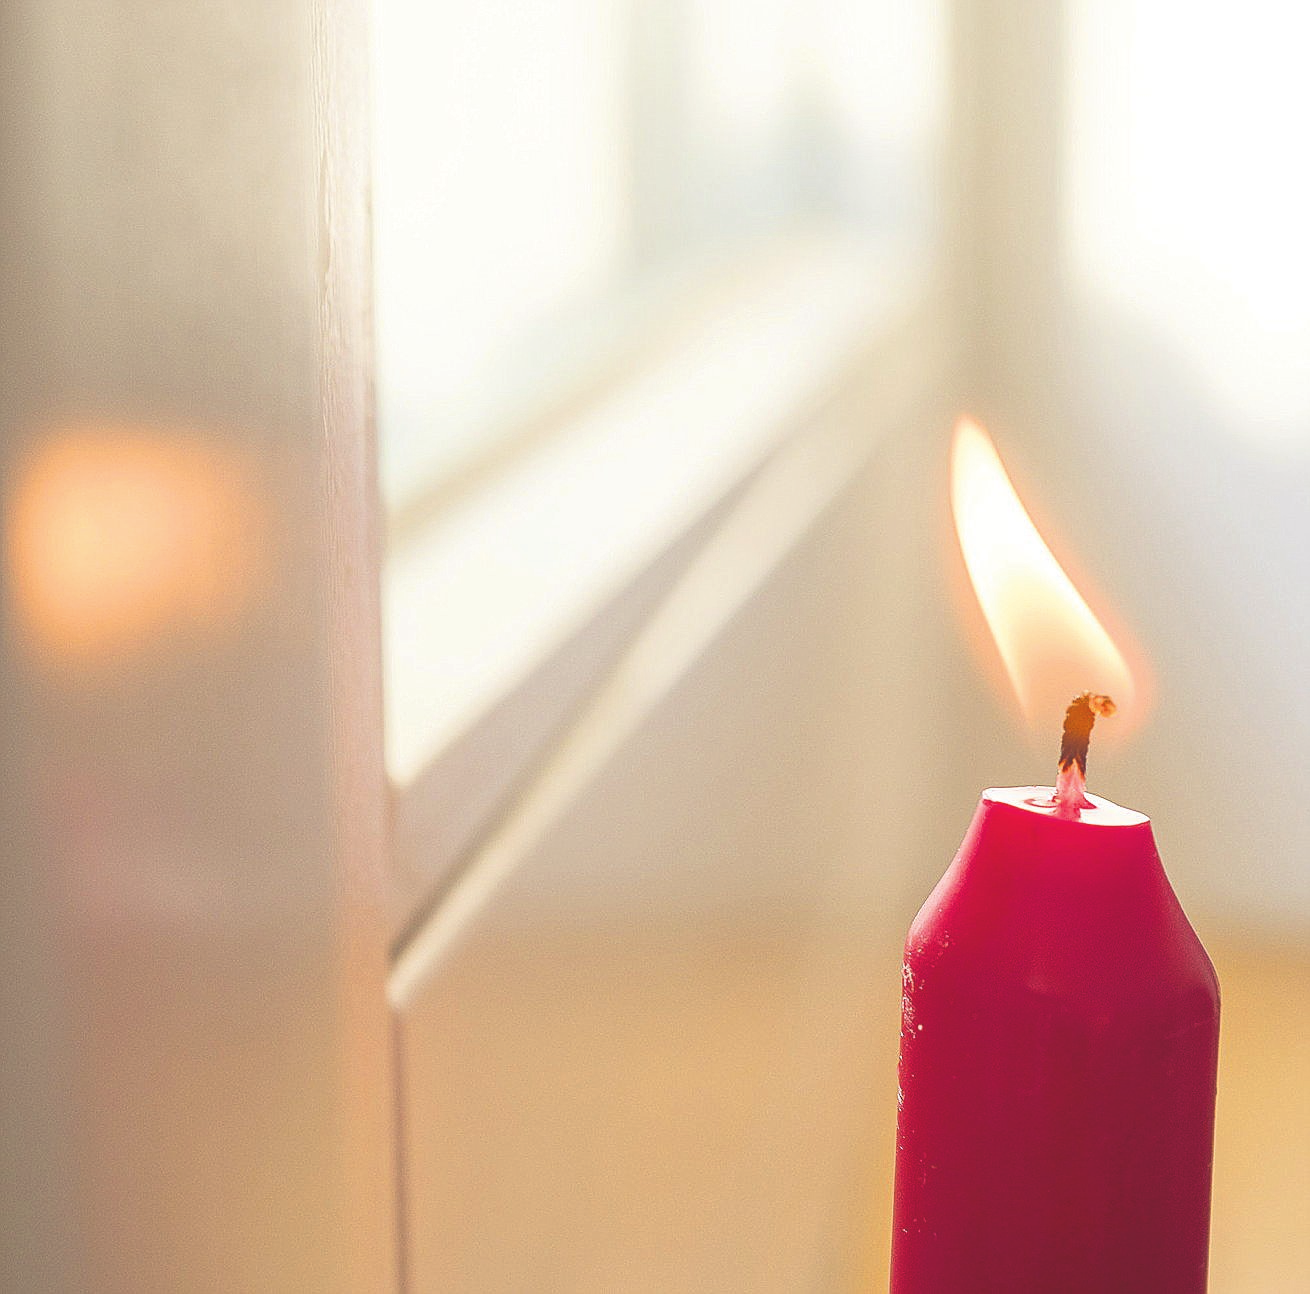 Flackert die Kerzenflamme neben dem Fenster, ist es undicht. FOTO: ANDREA WARNECKE/DPA-TMN